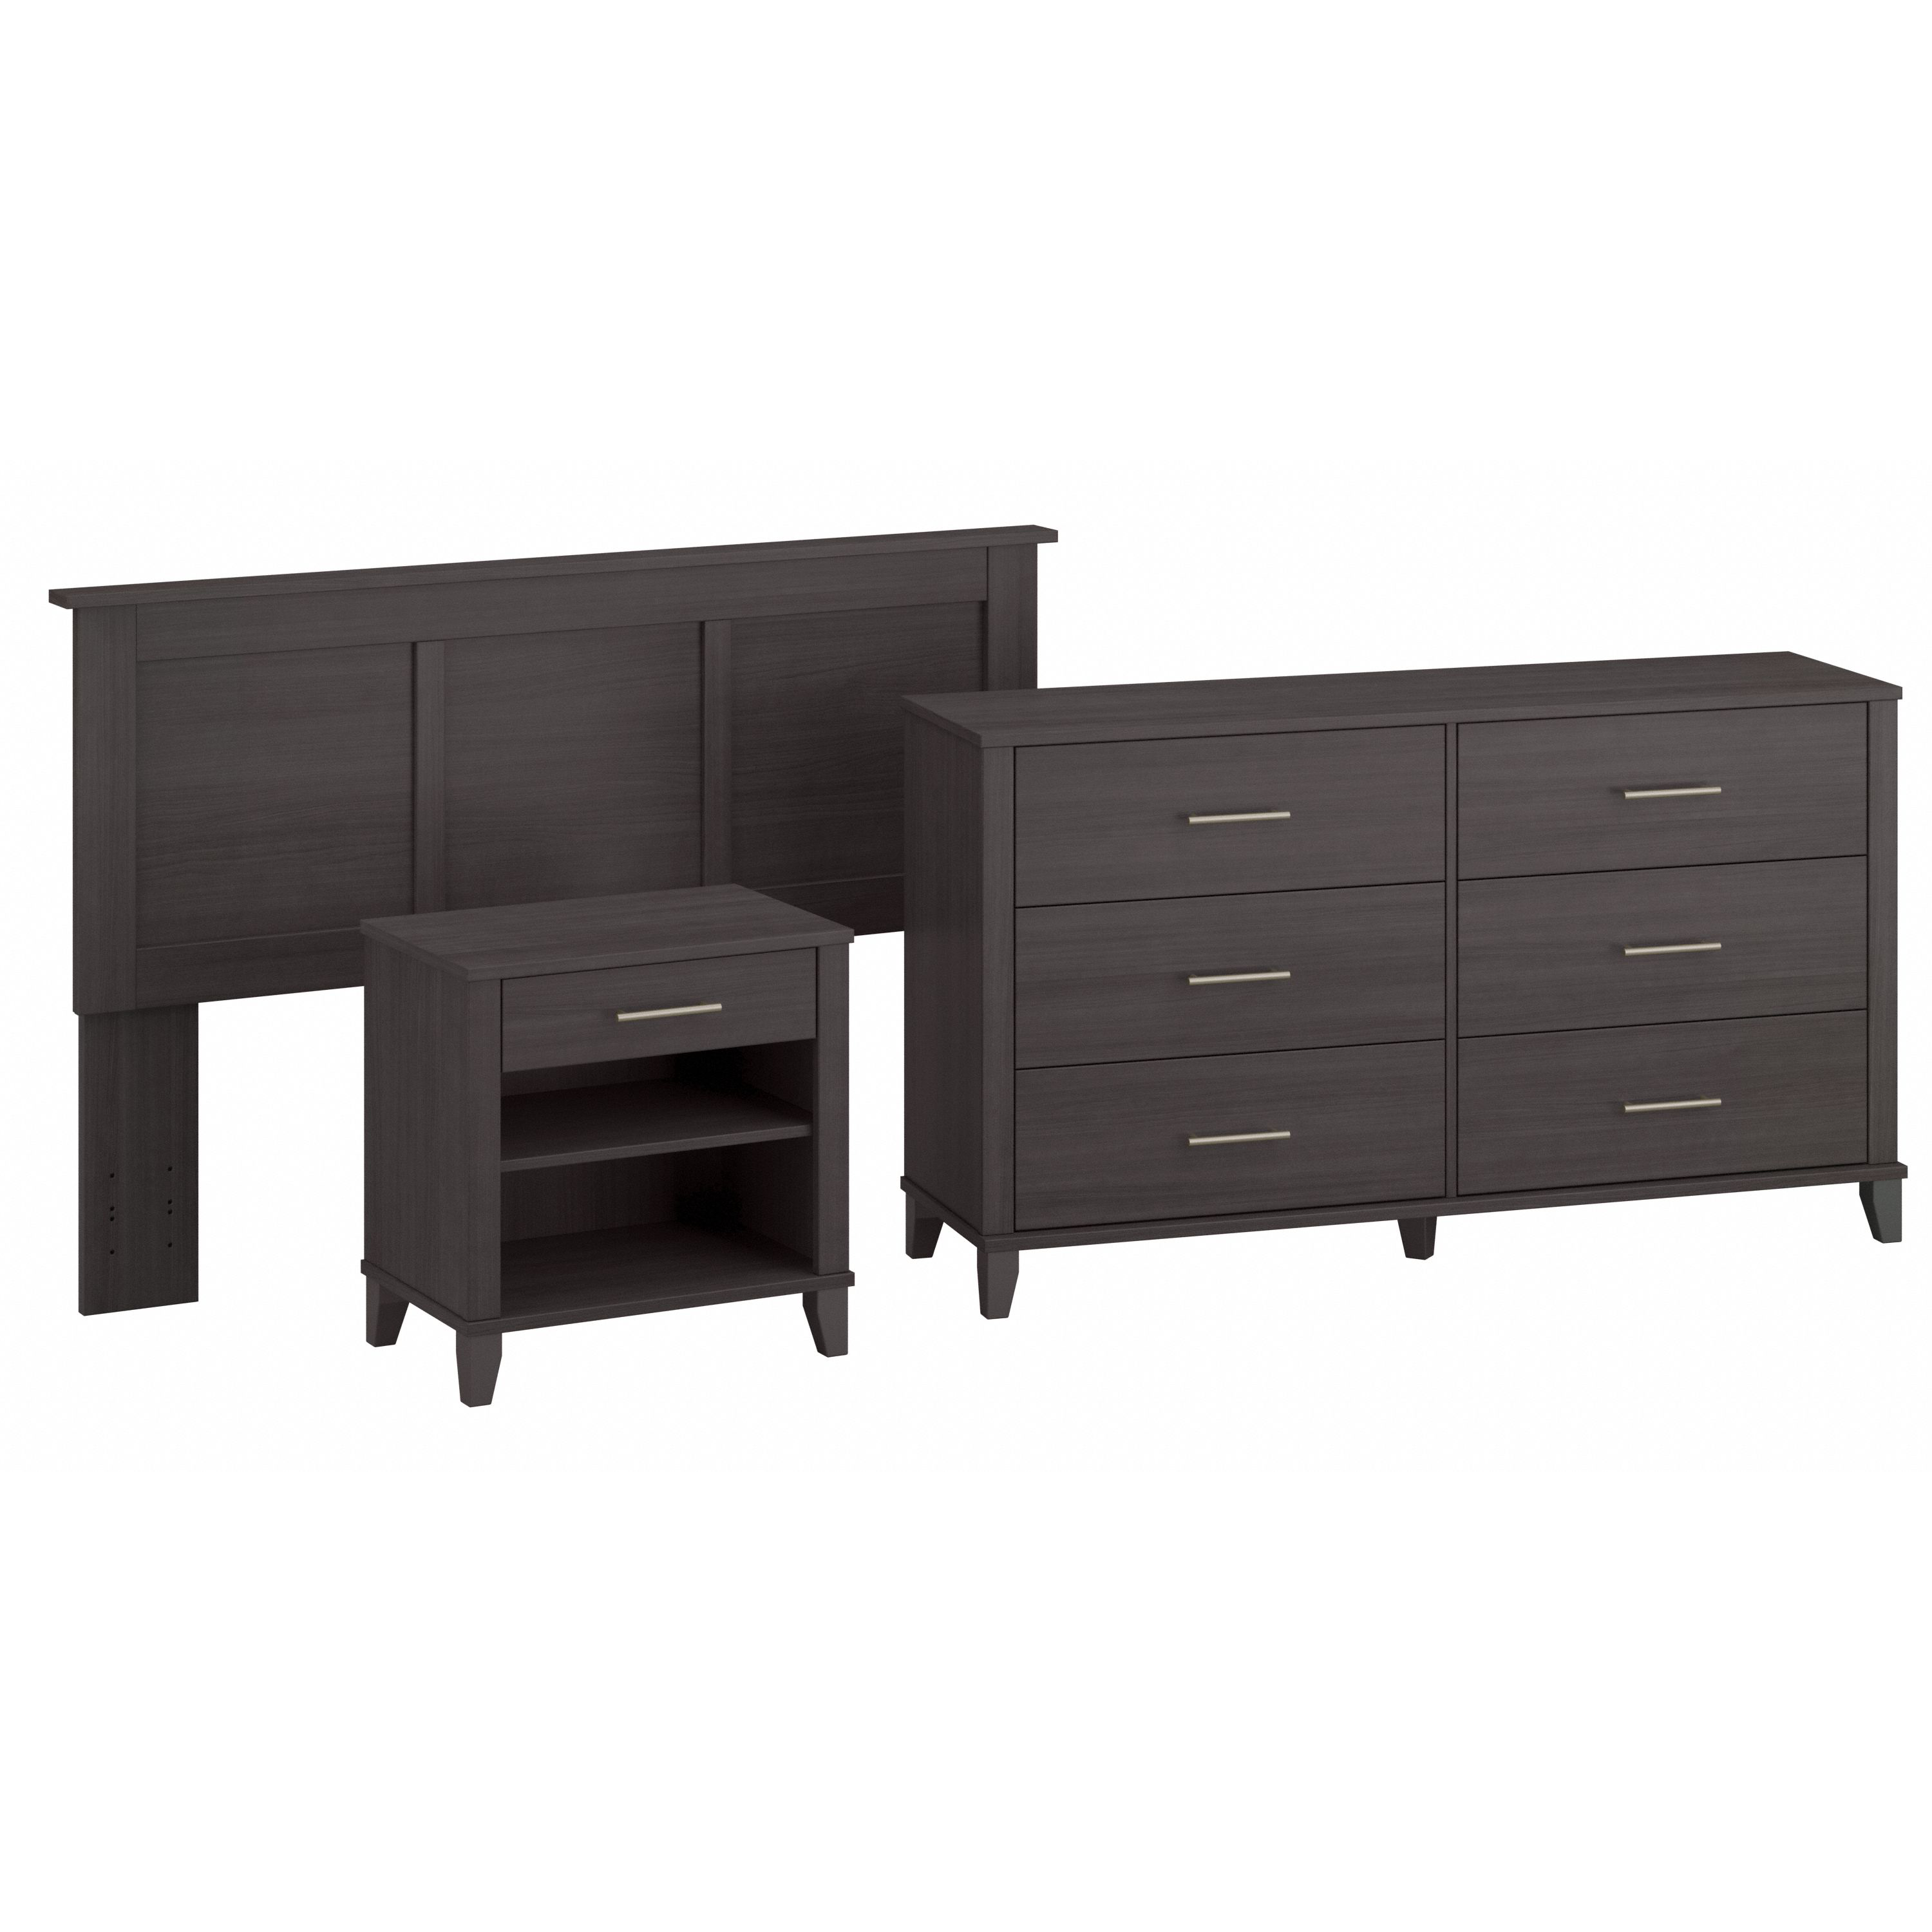 Shop Bush Furniture Somerset Full/Queen Size Headboard, Dresser and Nightstand Bedroom Set 02 SET003SG #color_storm gray